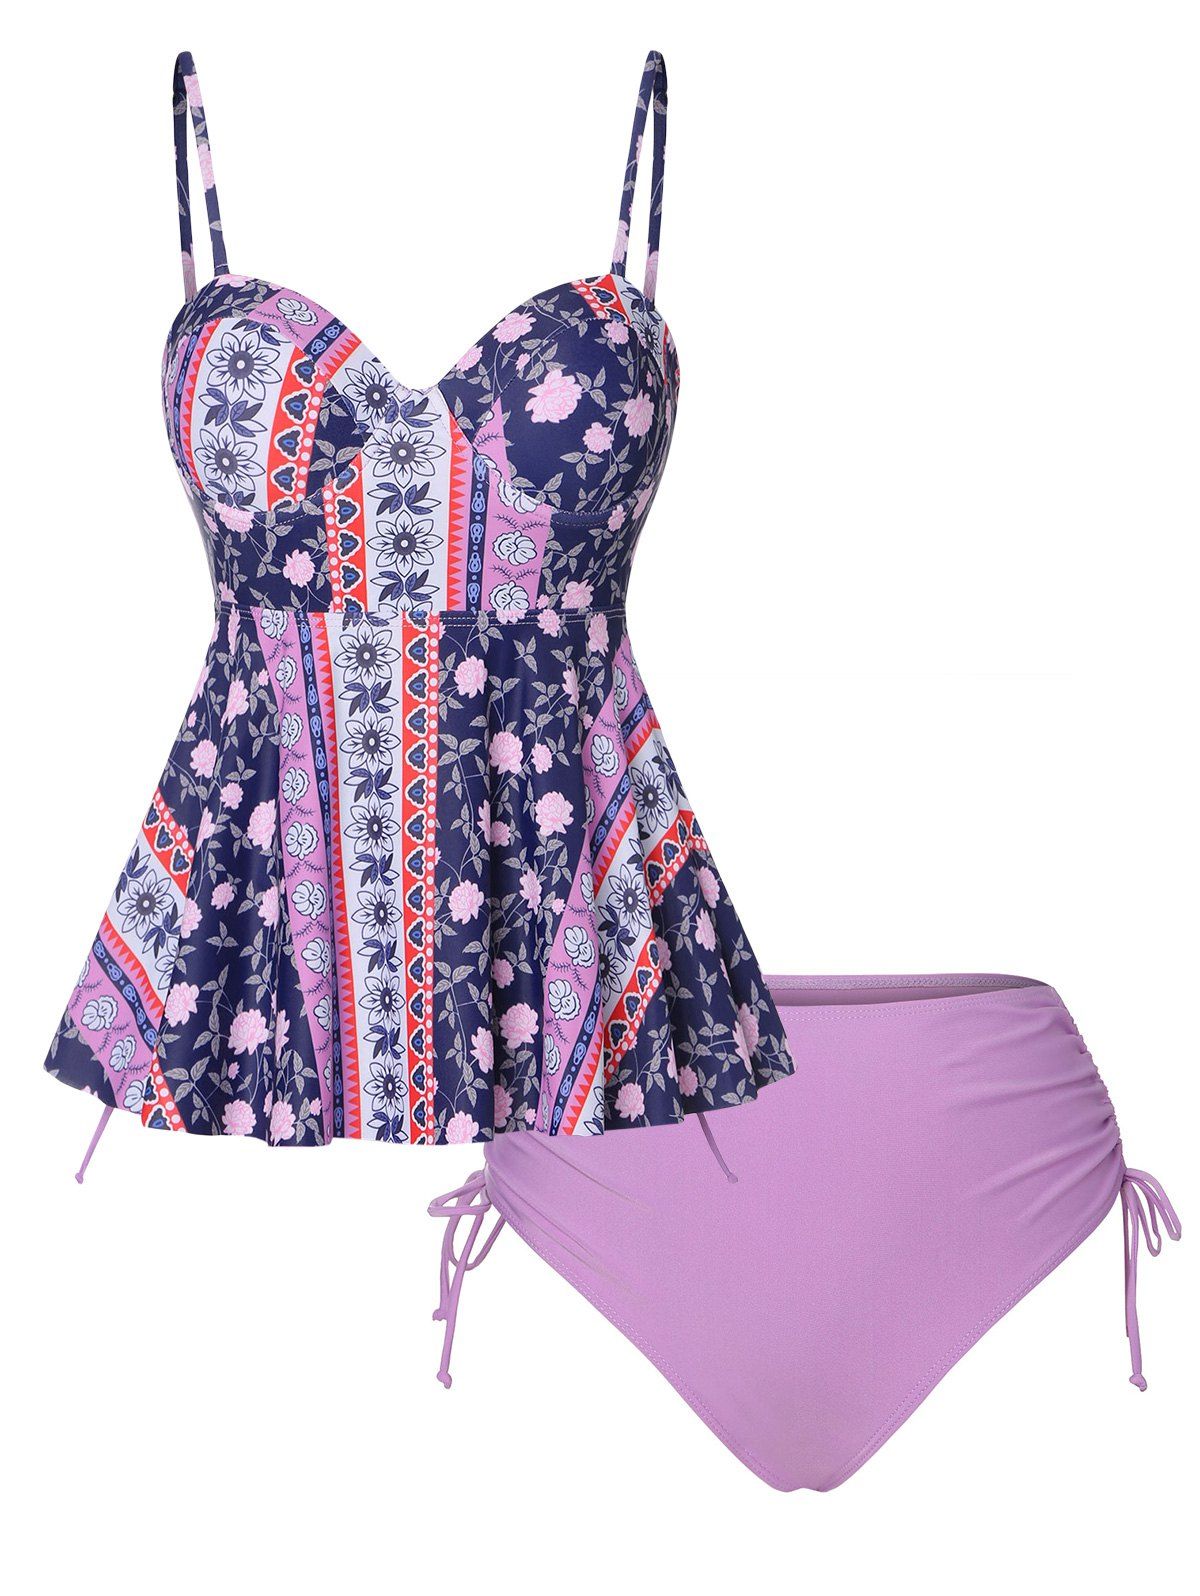 Tribal Modest Tankini Swimsuit Floral Push Up Underwired Swimwear Set - LIGHT PURPLE S